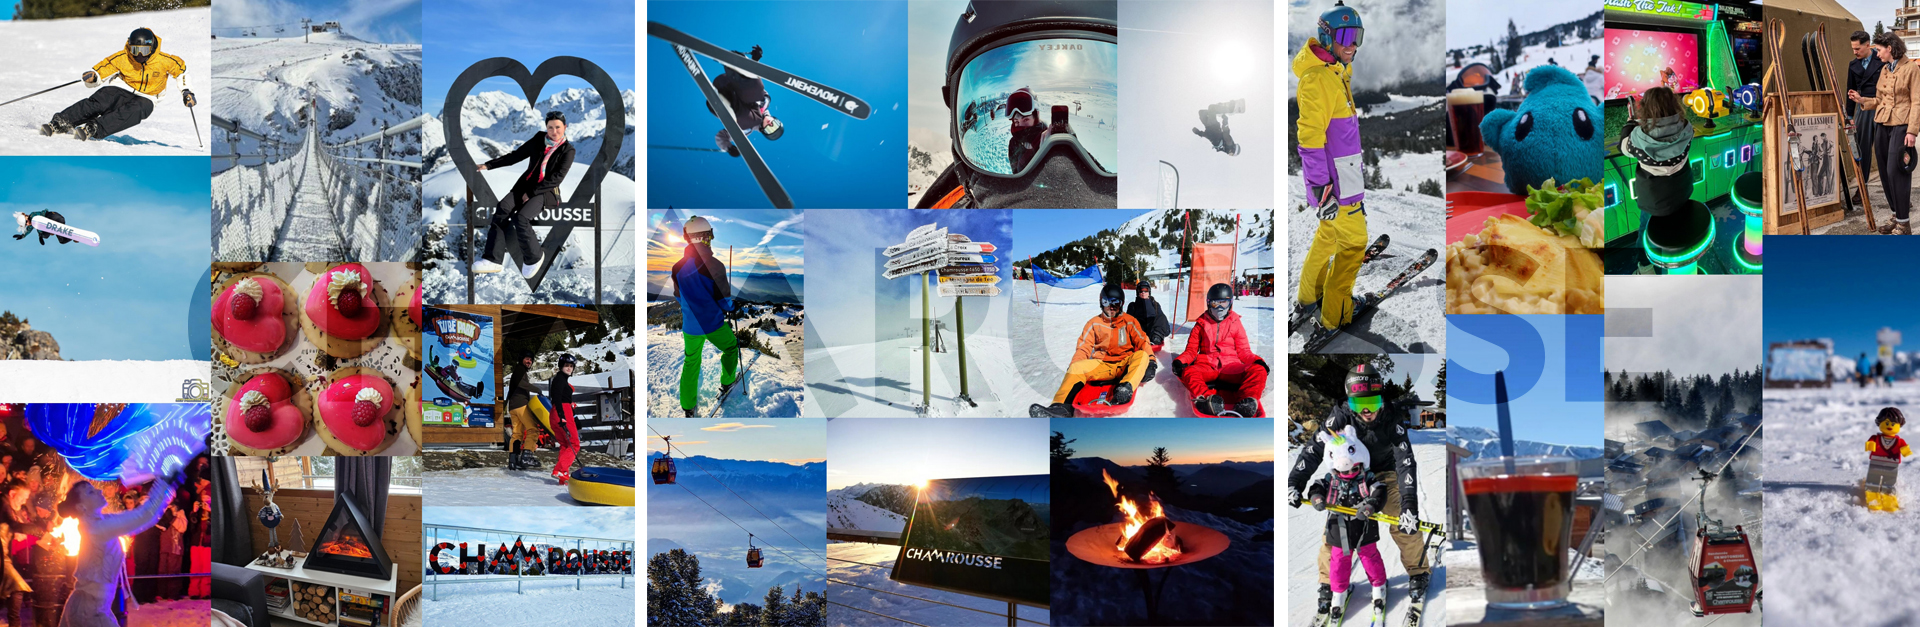 Chamrousse photo montage instagram memories facebook winter 2023-2024 ski resort mountain grenoble isere french alps france - © DR